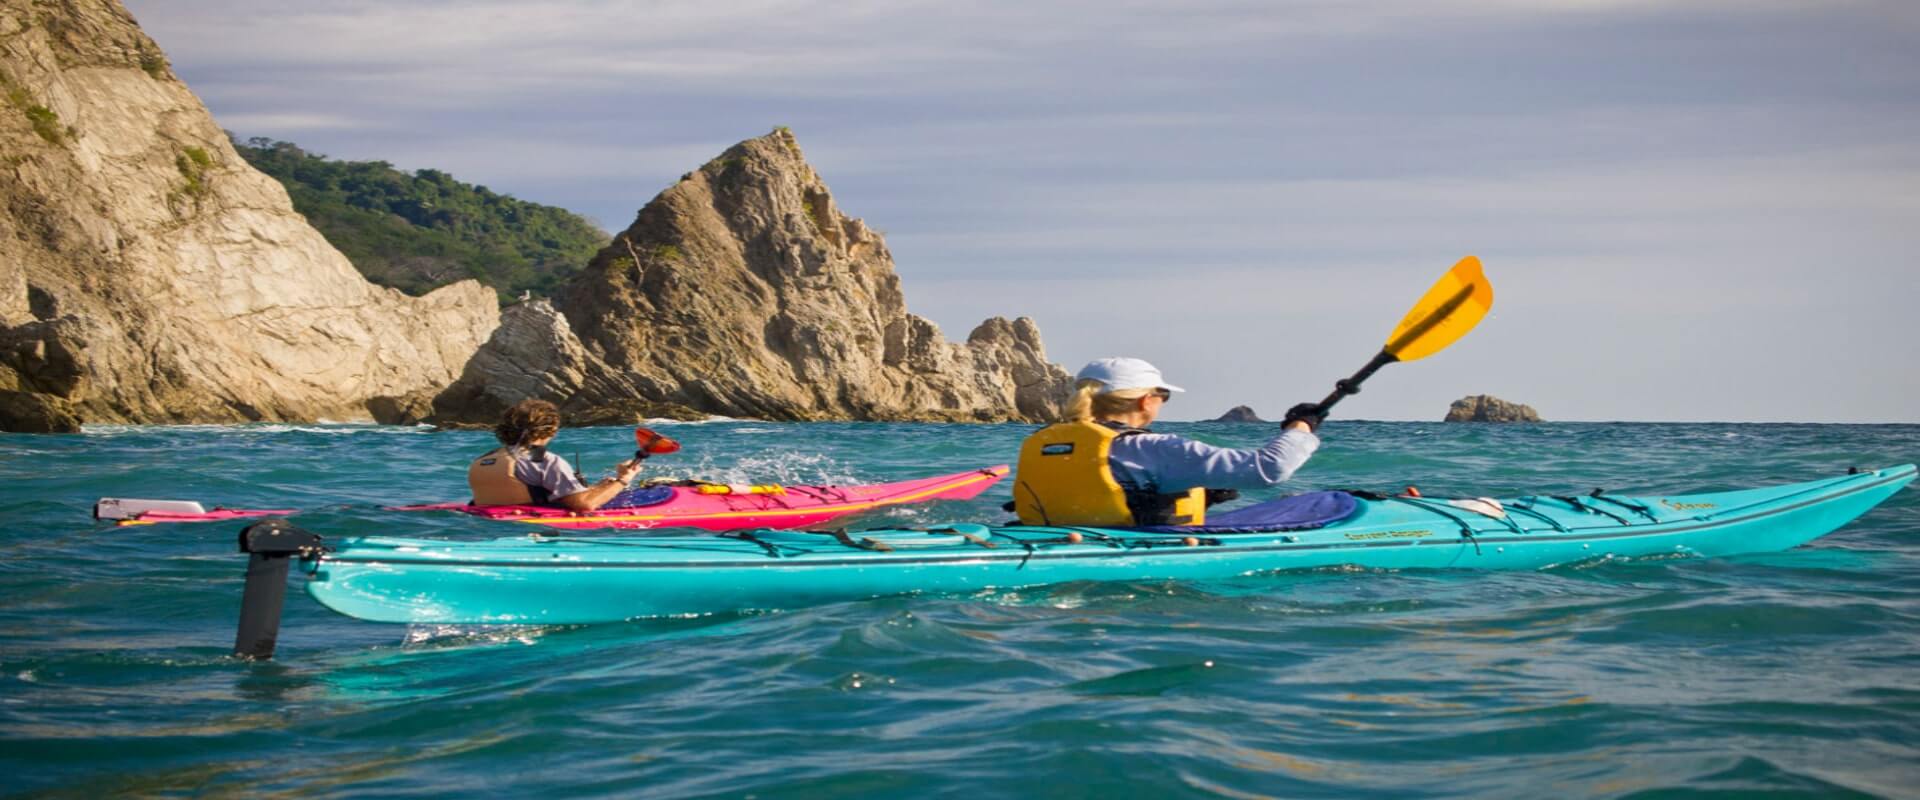 Kayak y snorkeling | Costa Rica Jade Tours